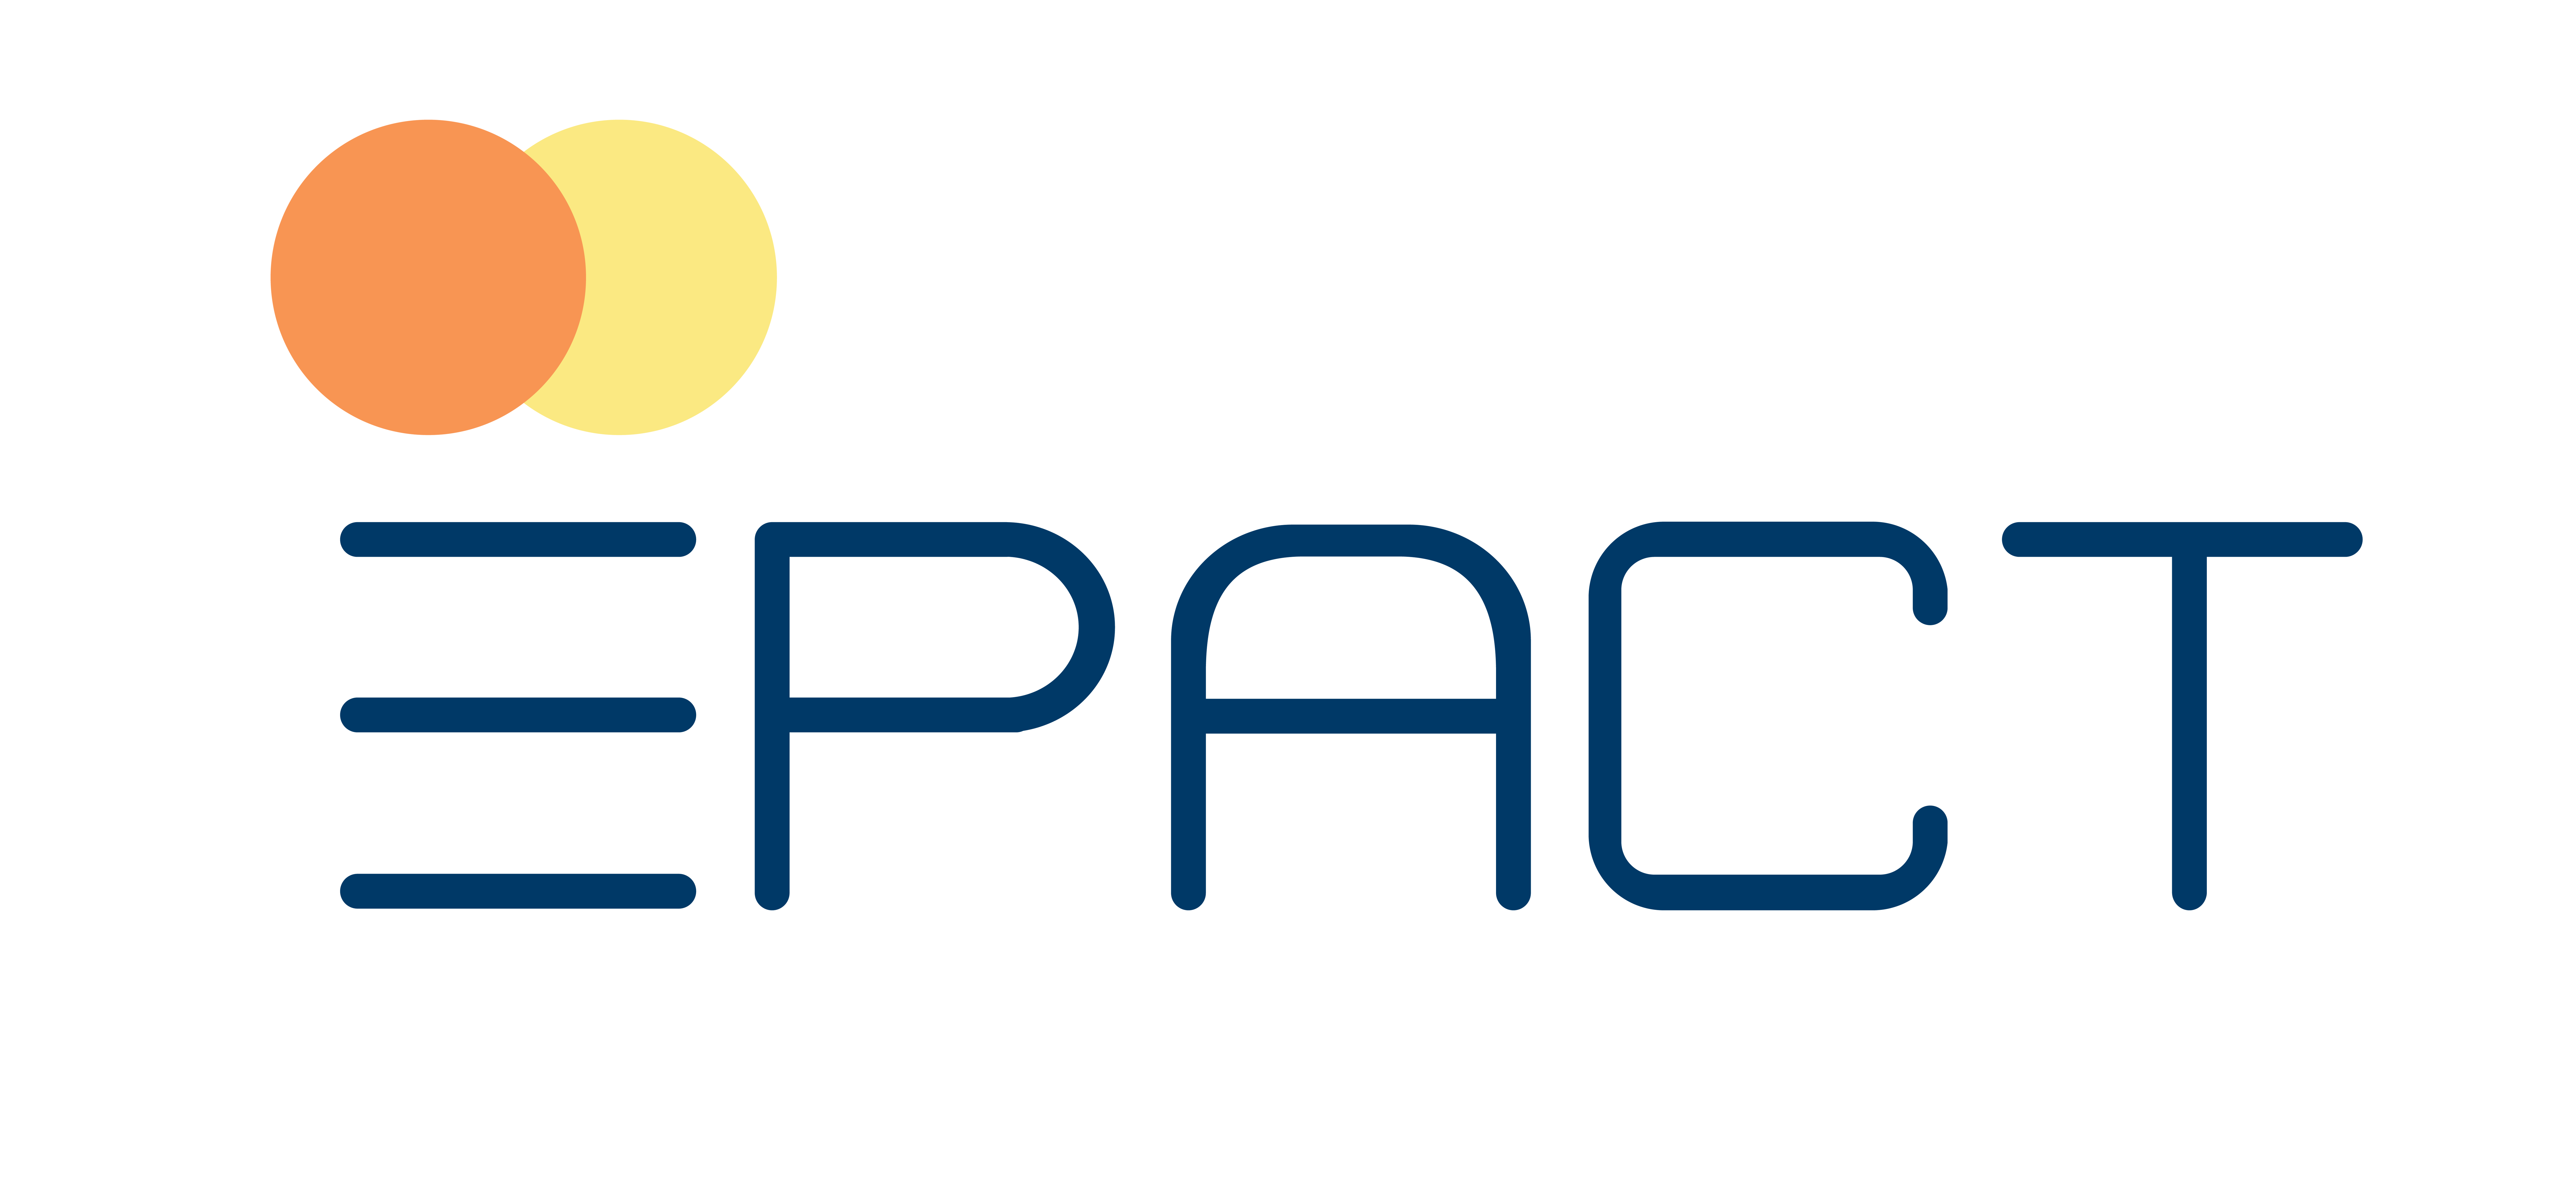 ePact Ltd